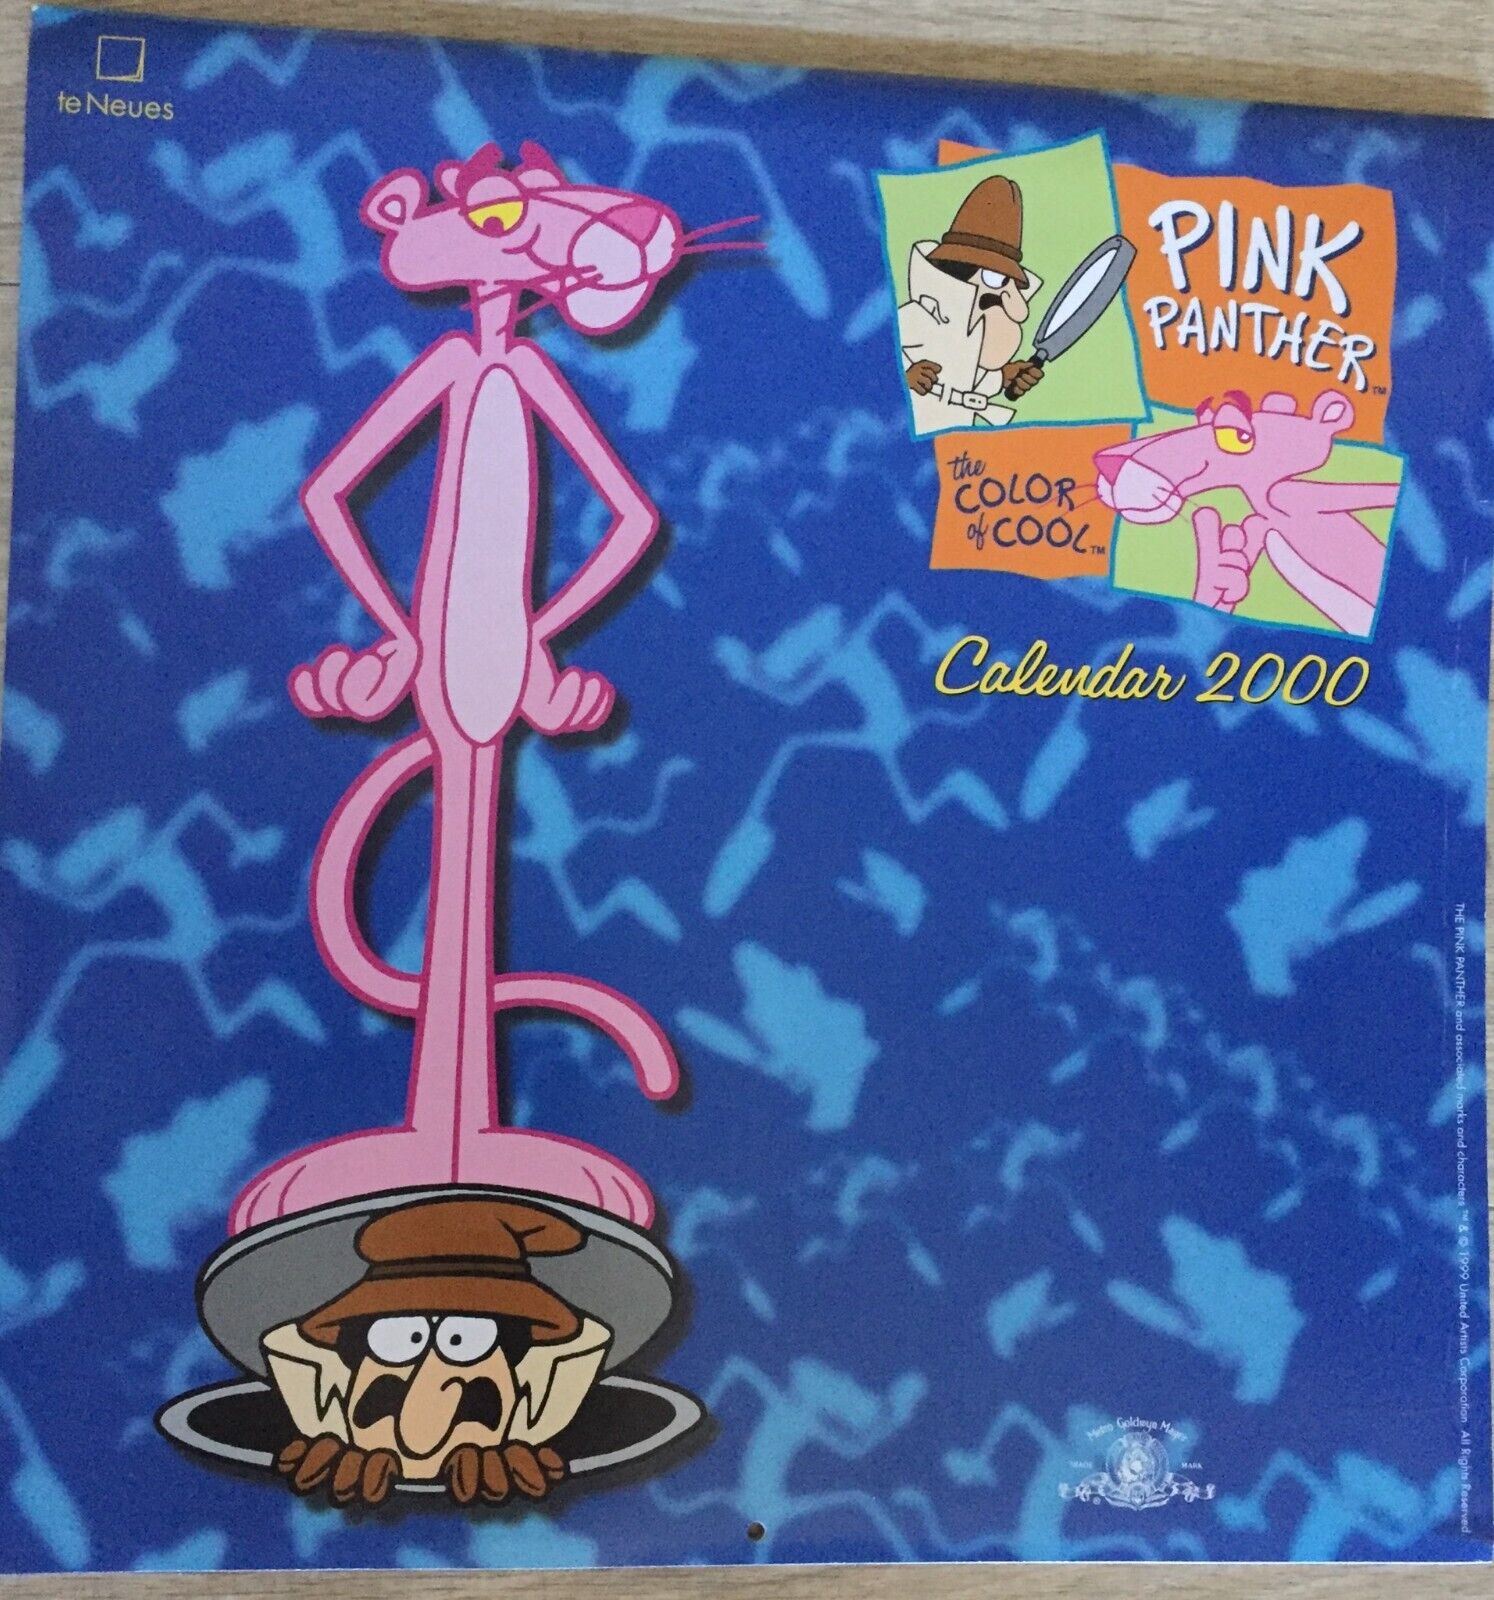  Vintage Pink Panther Calendar ADULT PARTY ideas?